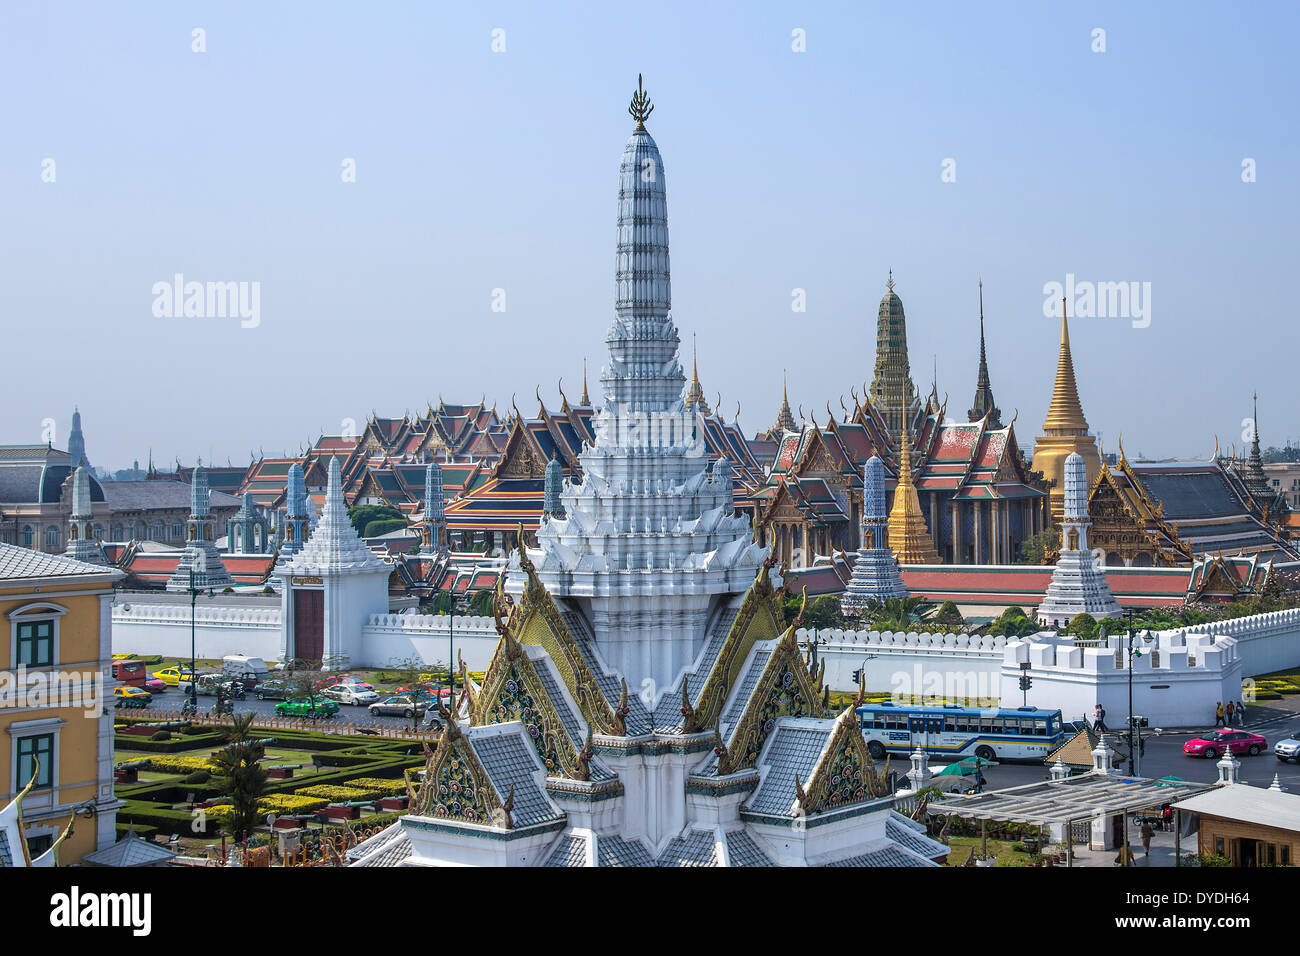 Thailand Asien Bangkok Royal Palace Wat Phra Kaew Architektur bunte Farben Innenstadt berühmte Geschichte Bild Palast panorama Stockfoto